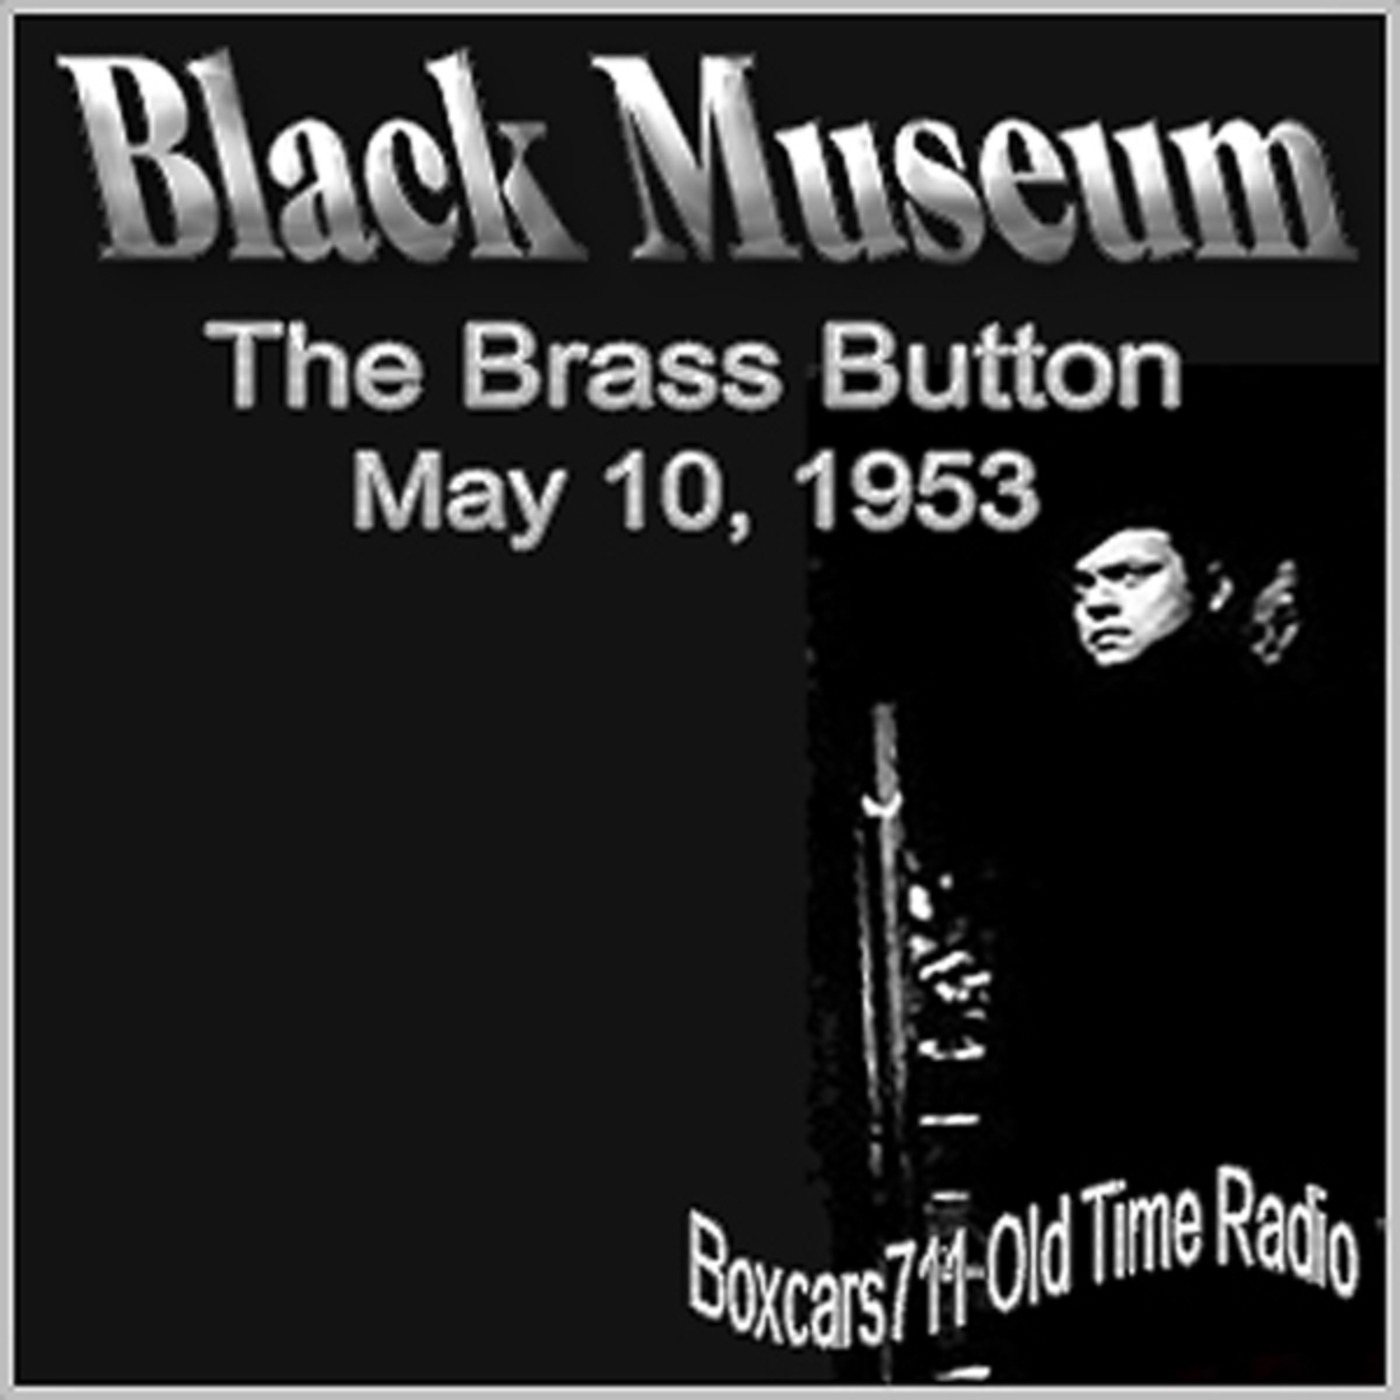 Episode 9582: The Black Museum - 